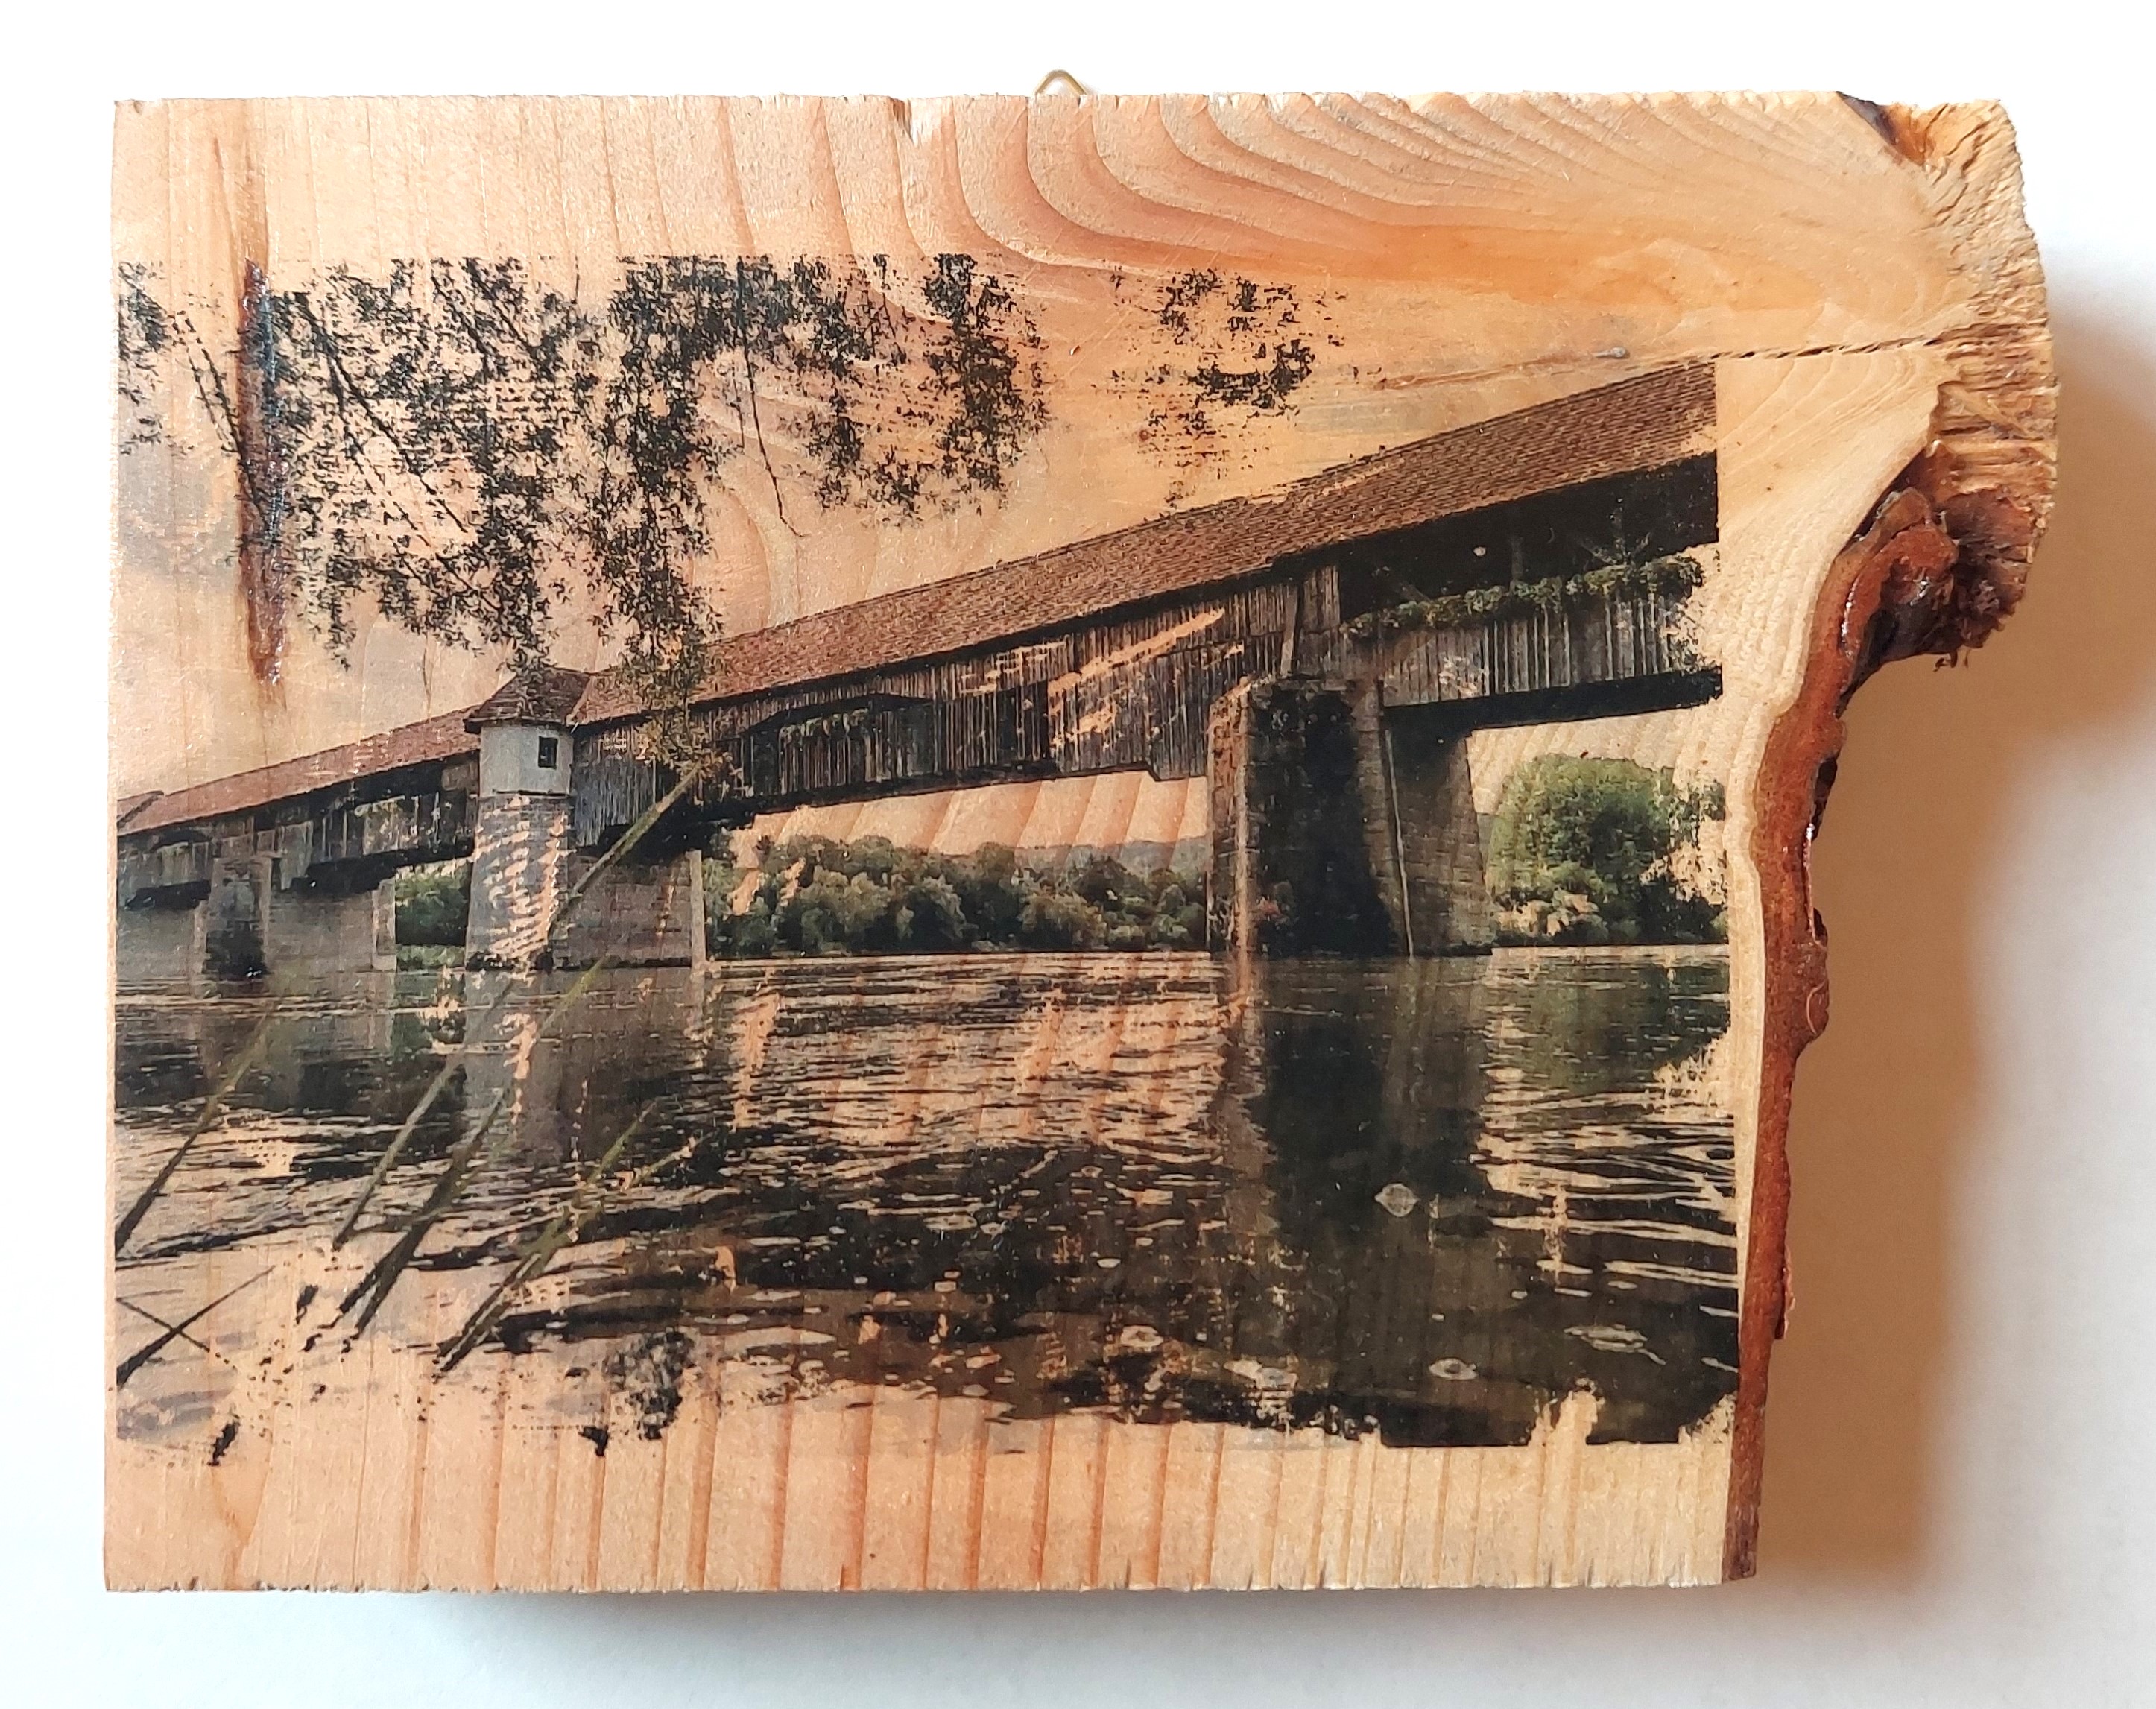  Holzbrücke künstlerisch 